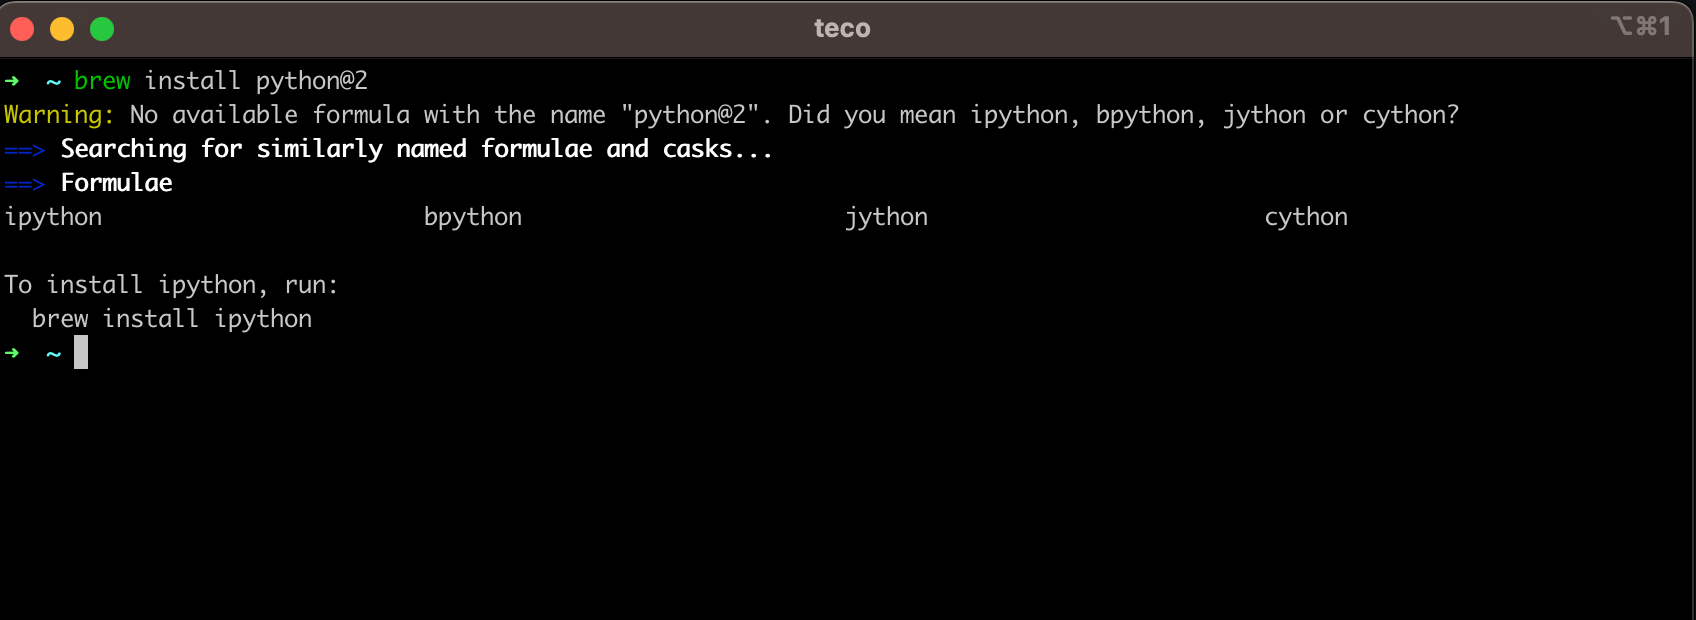 Installation error of Python 2 using Homebrew.